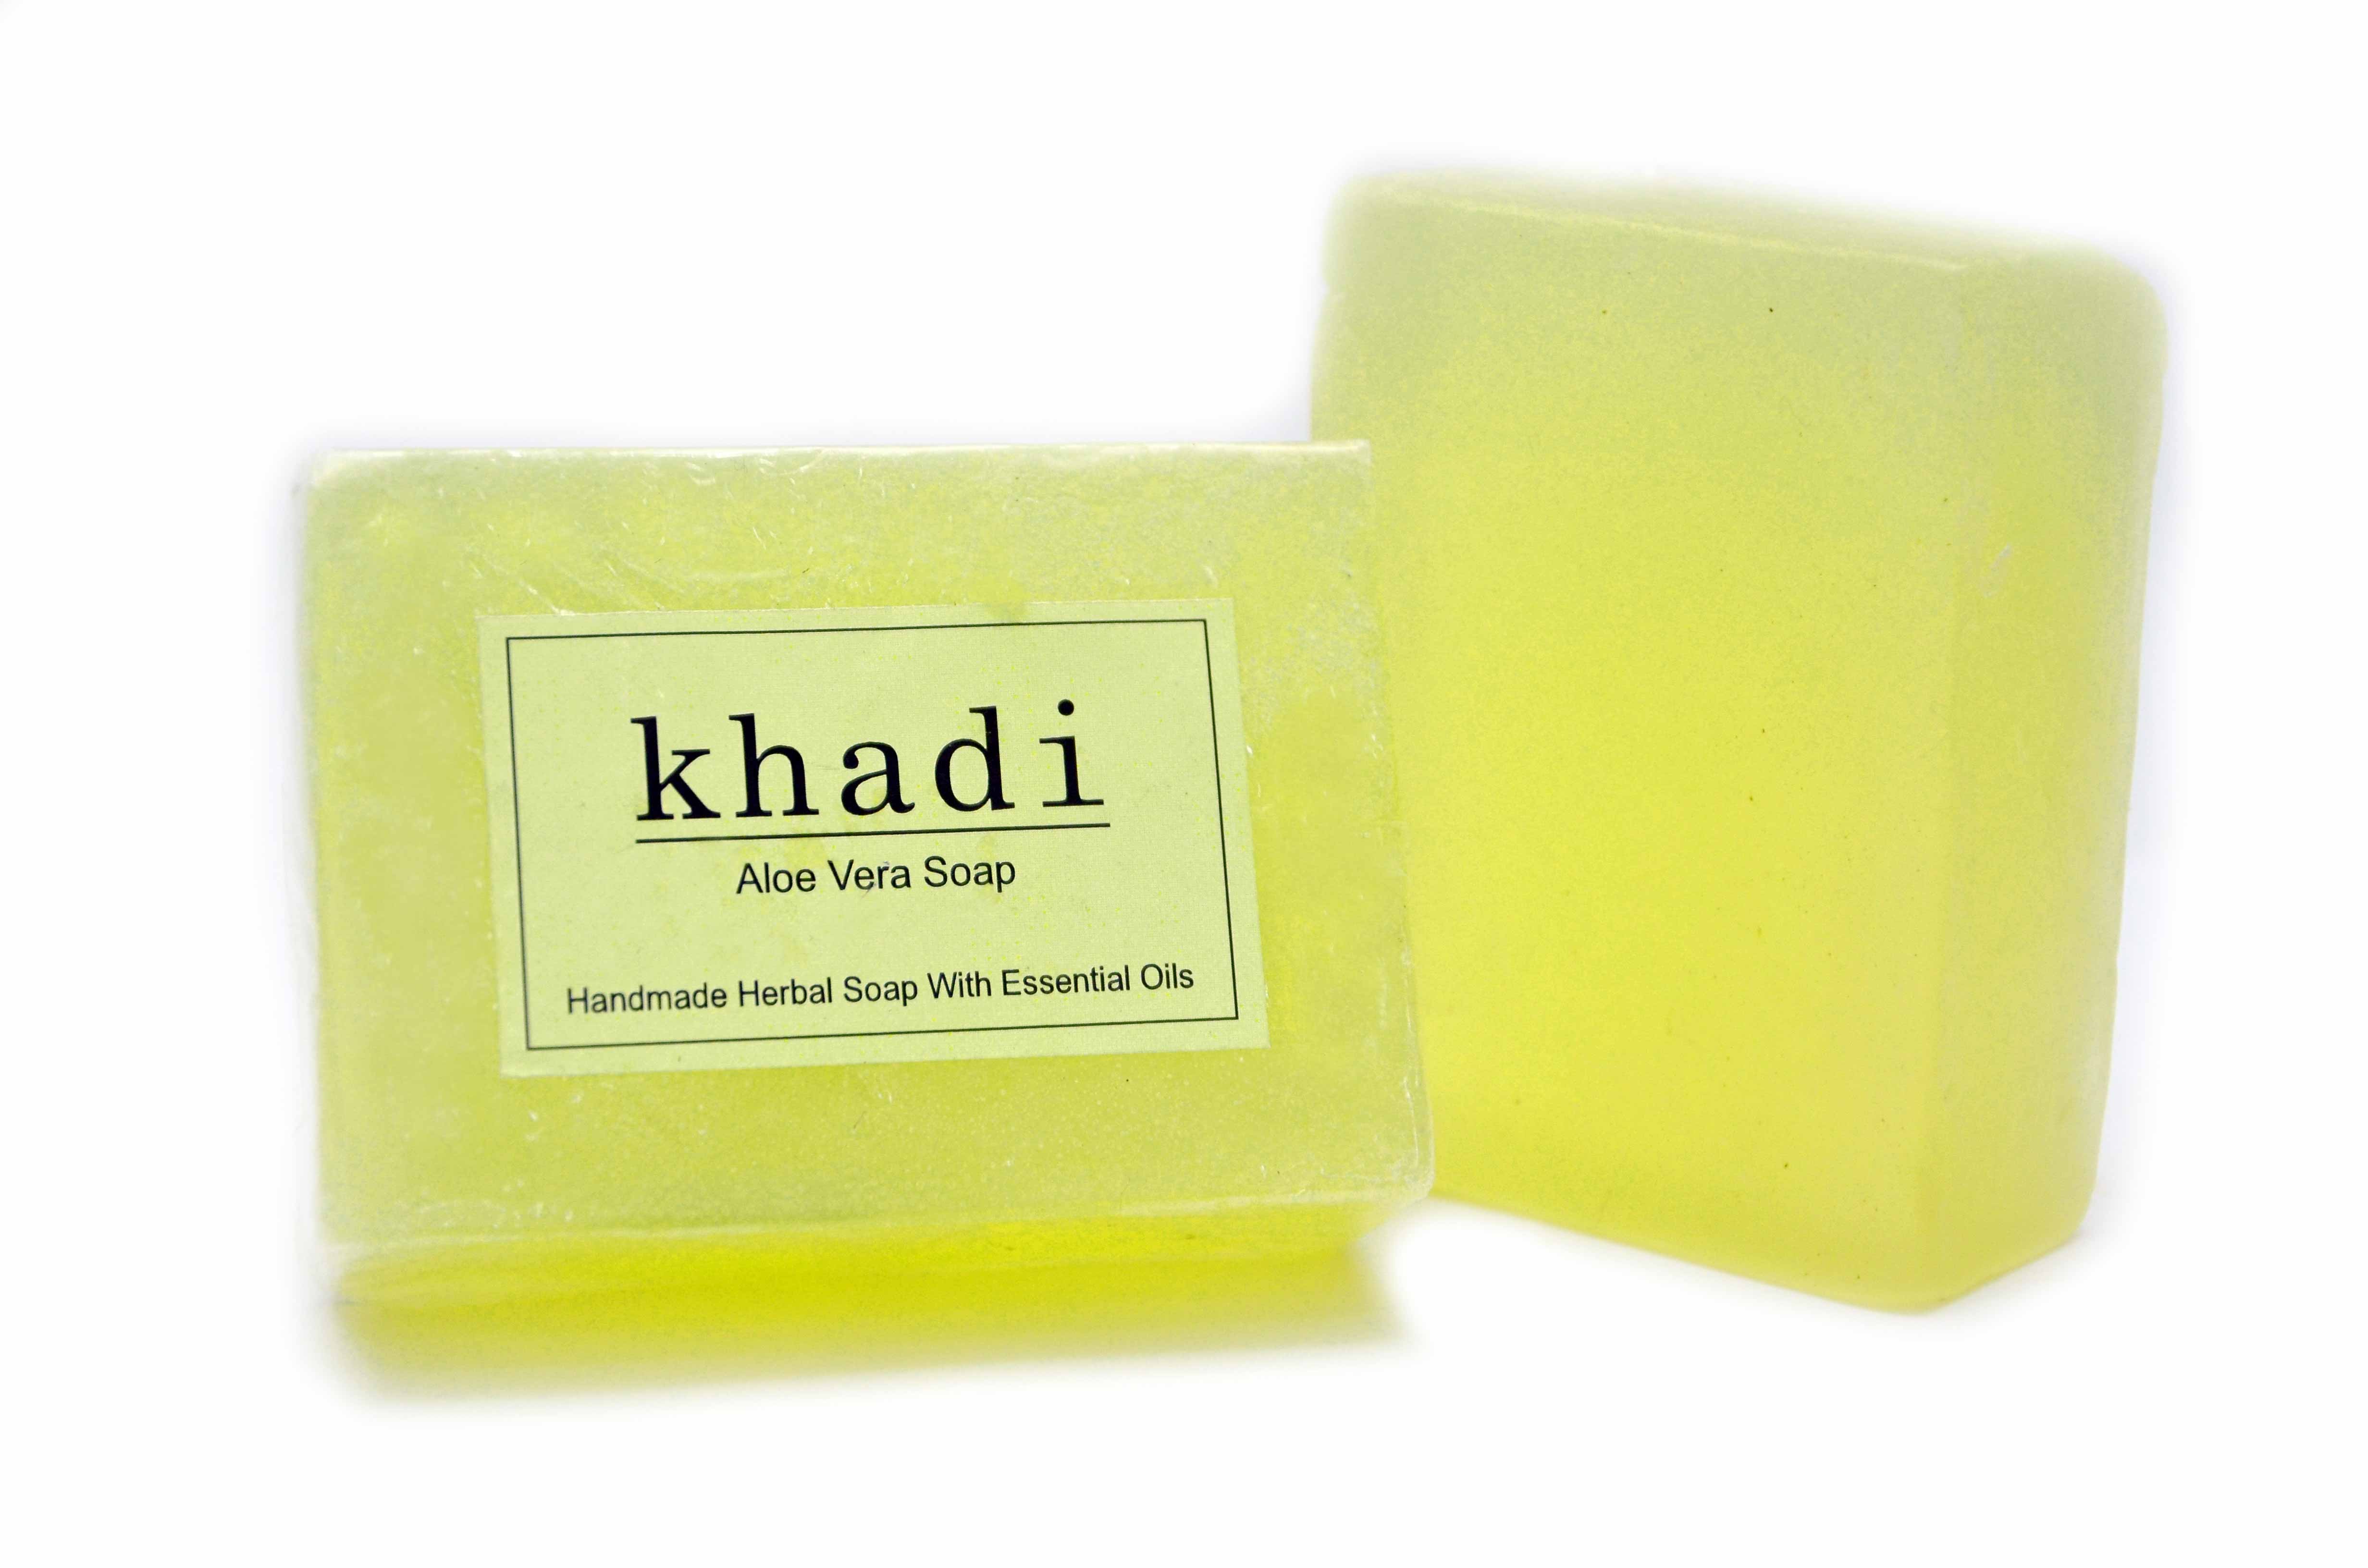 Buy Vagad's Khadi Aloevera Soap at Best Price Online